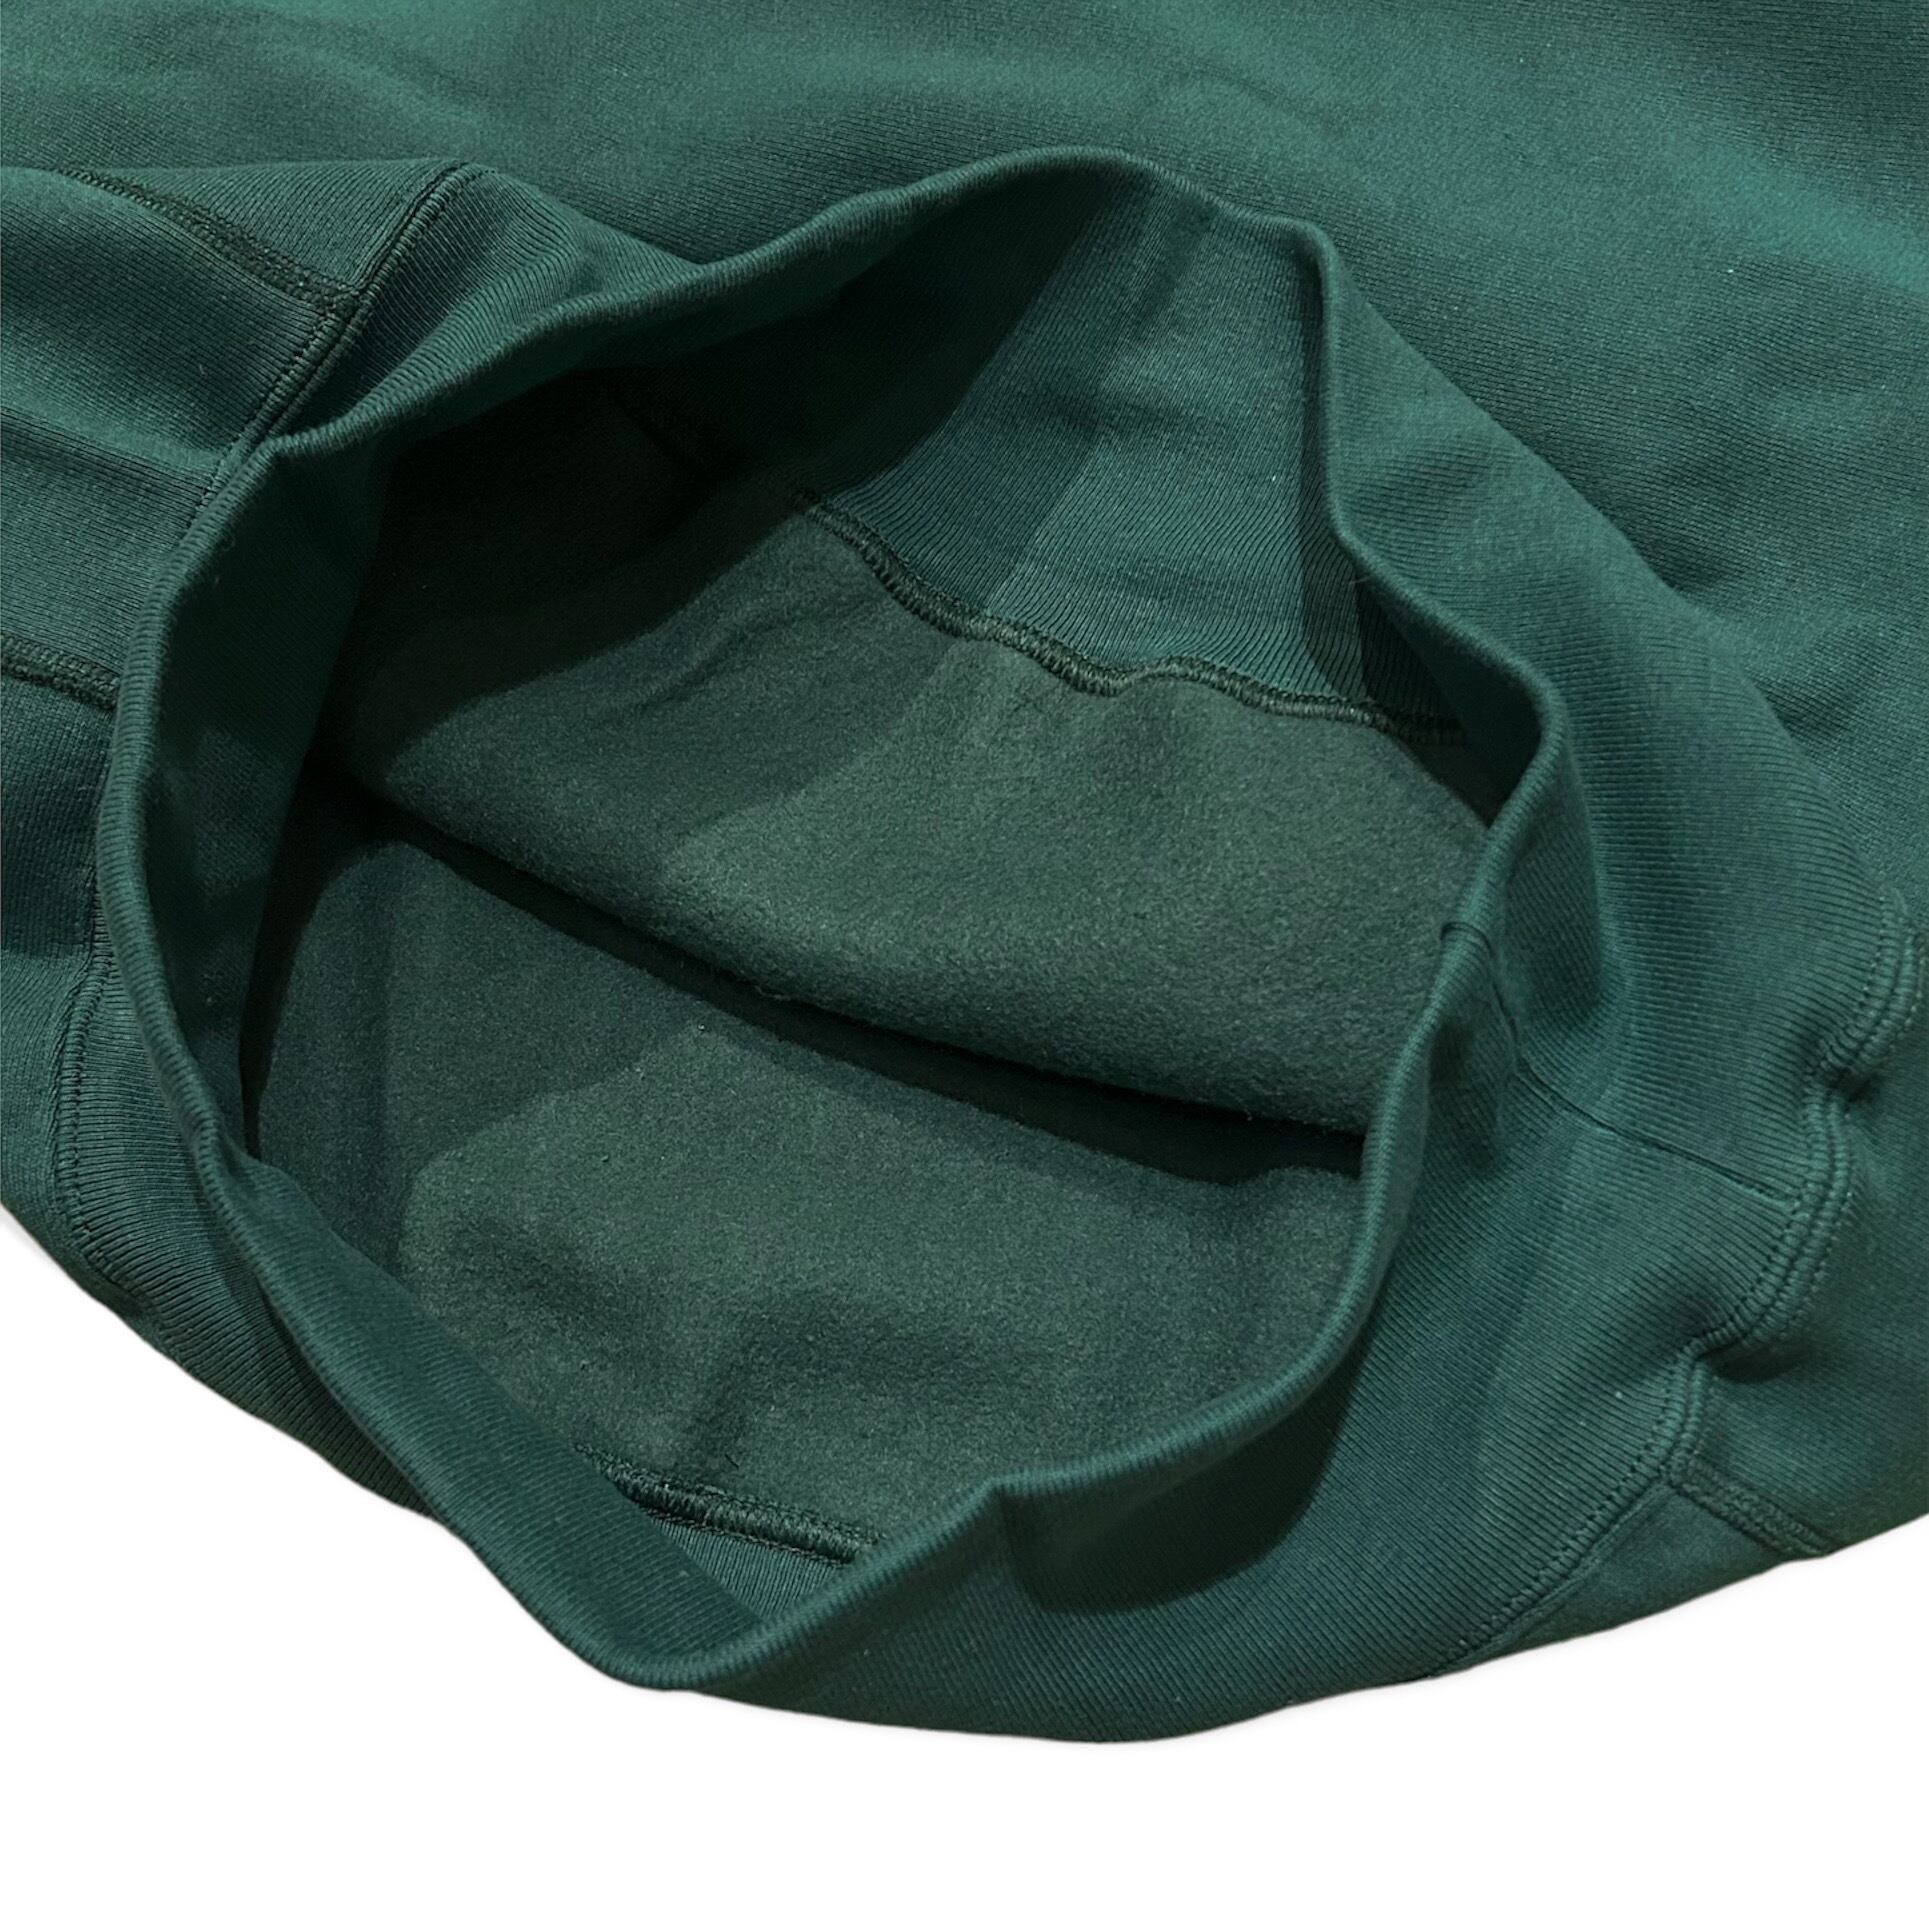 CAMBER / # CROSS KNIT Pullover Hooded Sweat Shirt M L キャンバー クロスニット パーカー  フーディー スウェット